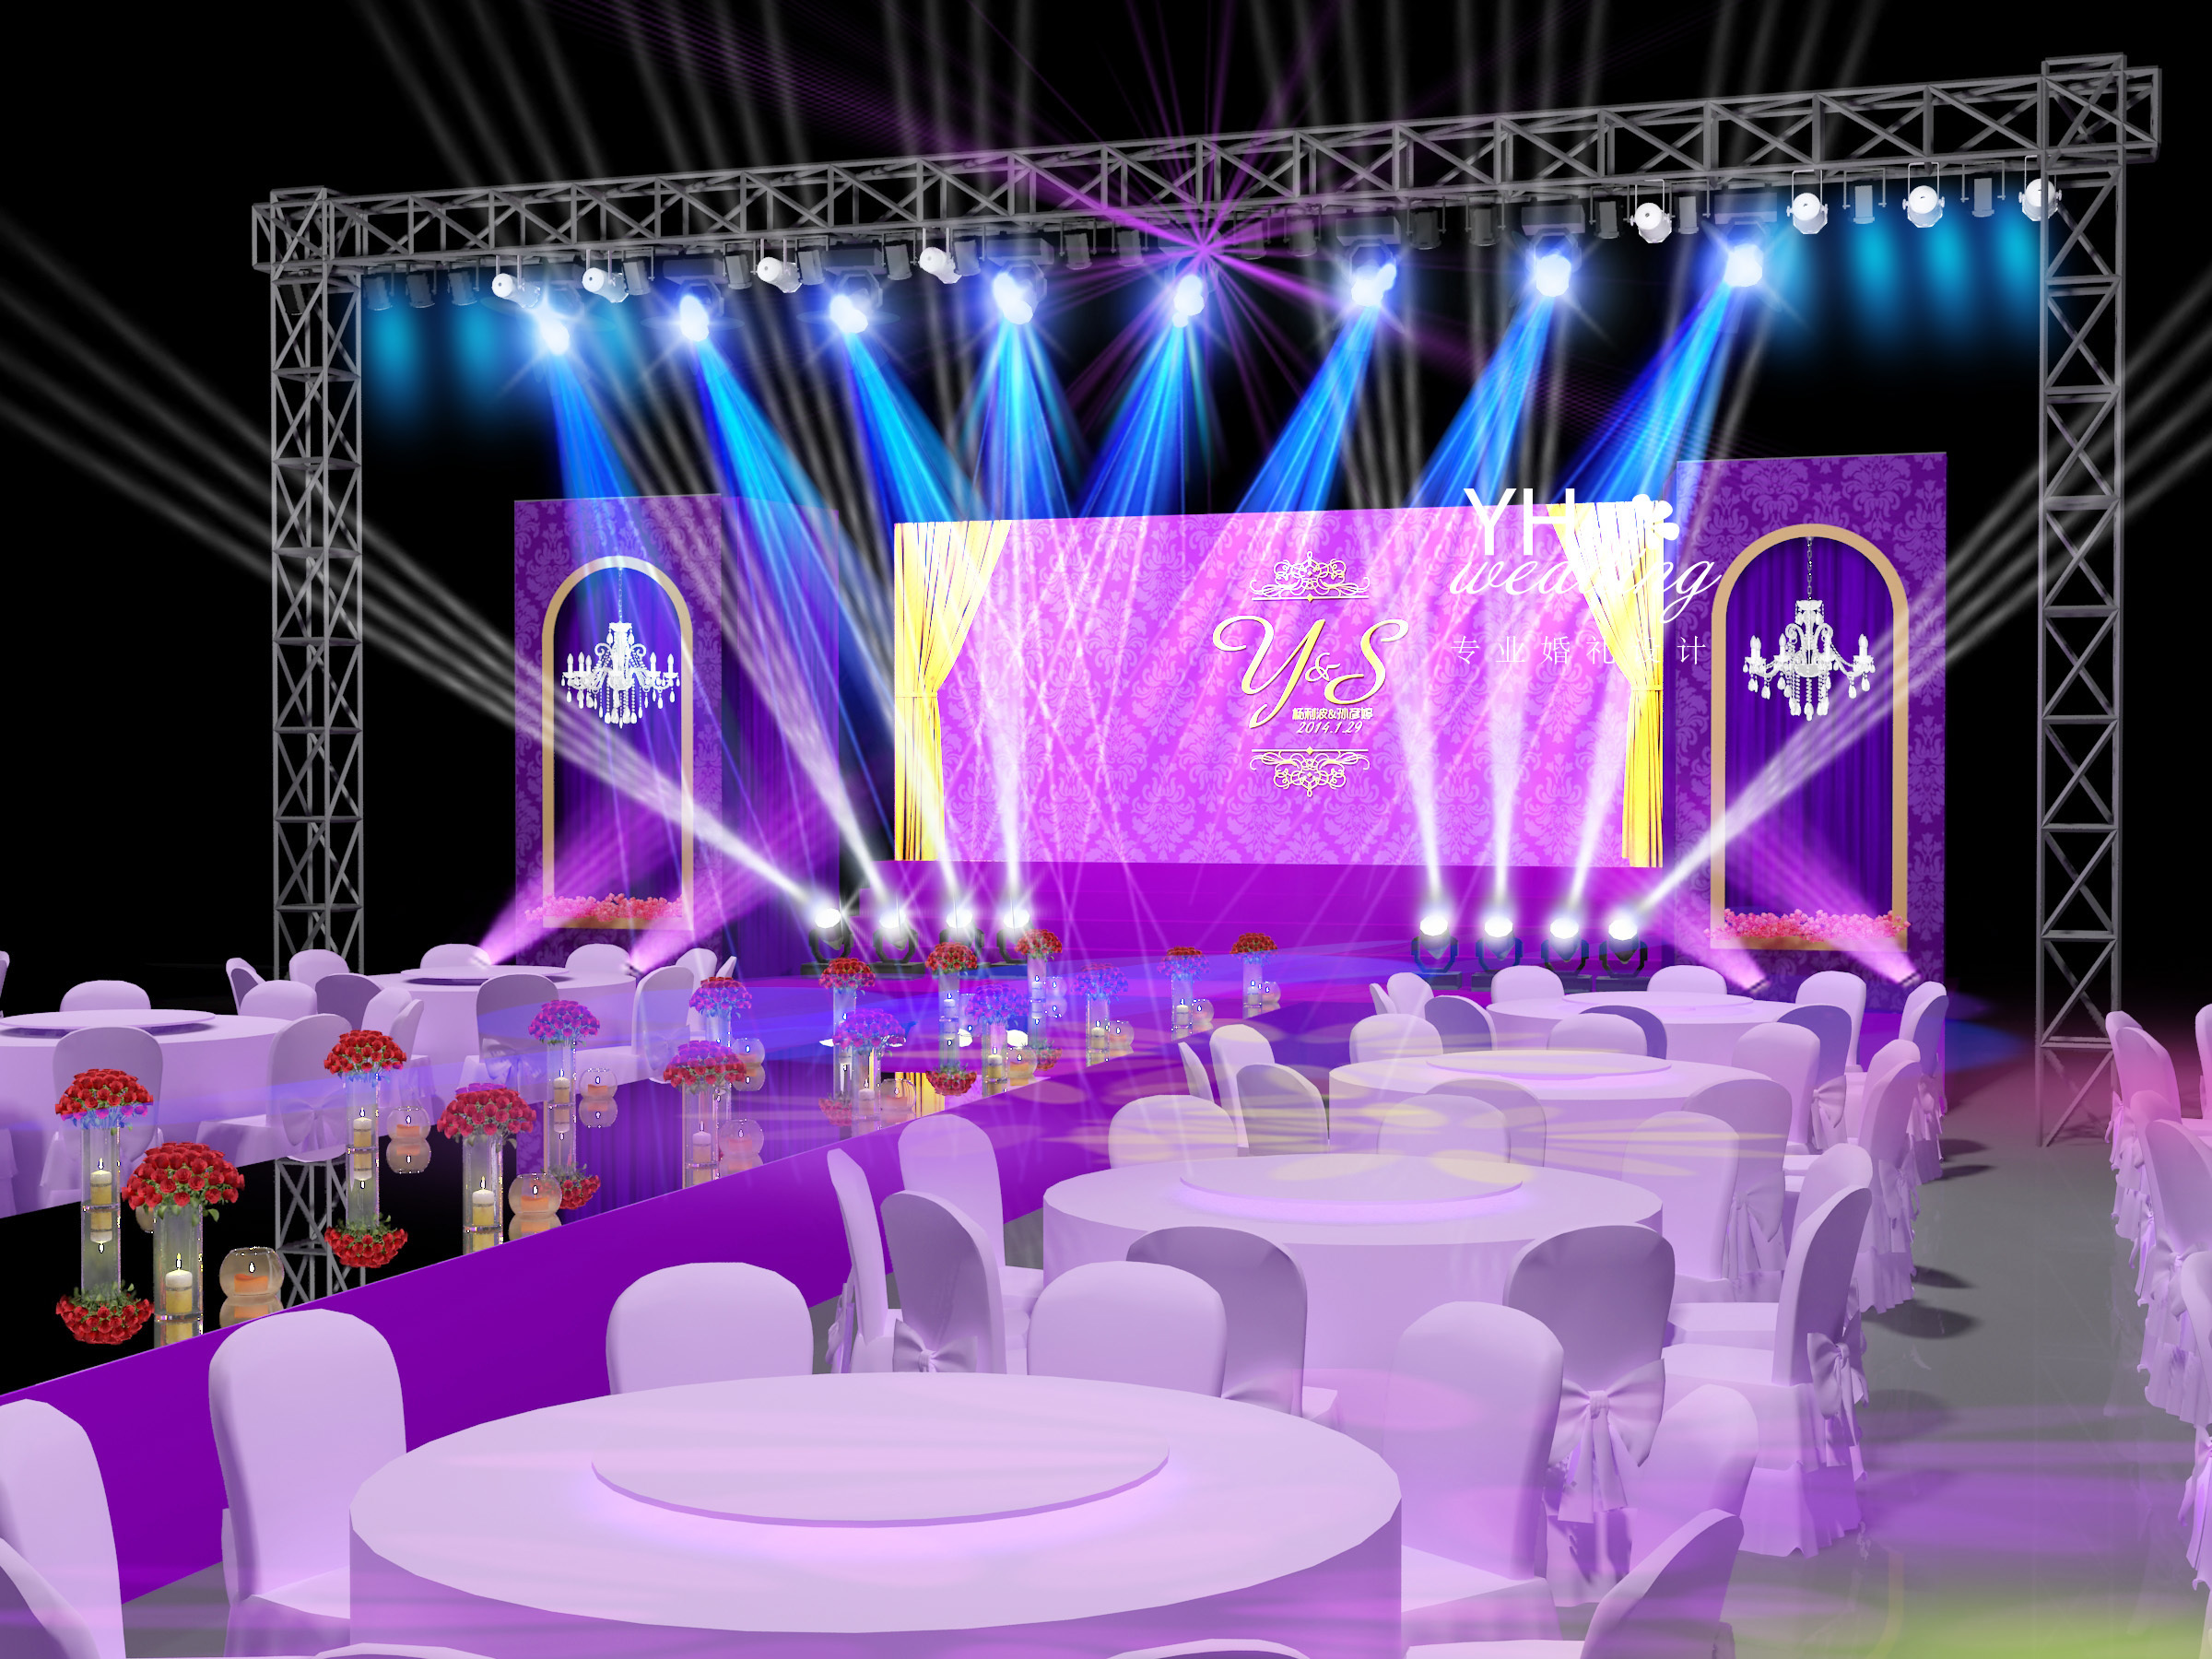 【yhwedding】紫色 香槟 婚礼3d效果图|空间|舞台美术